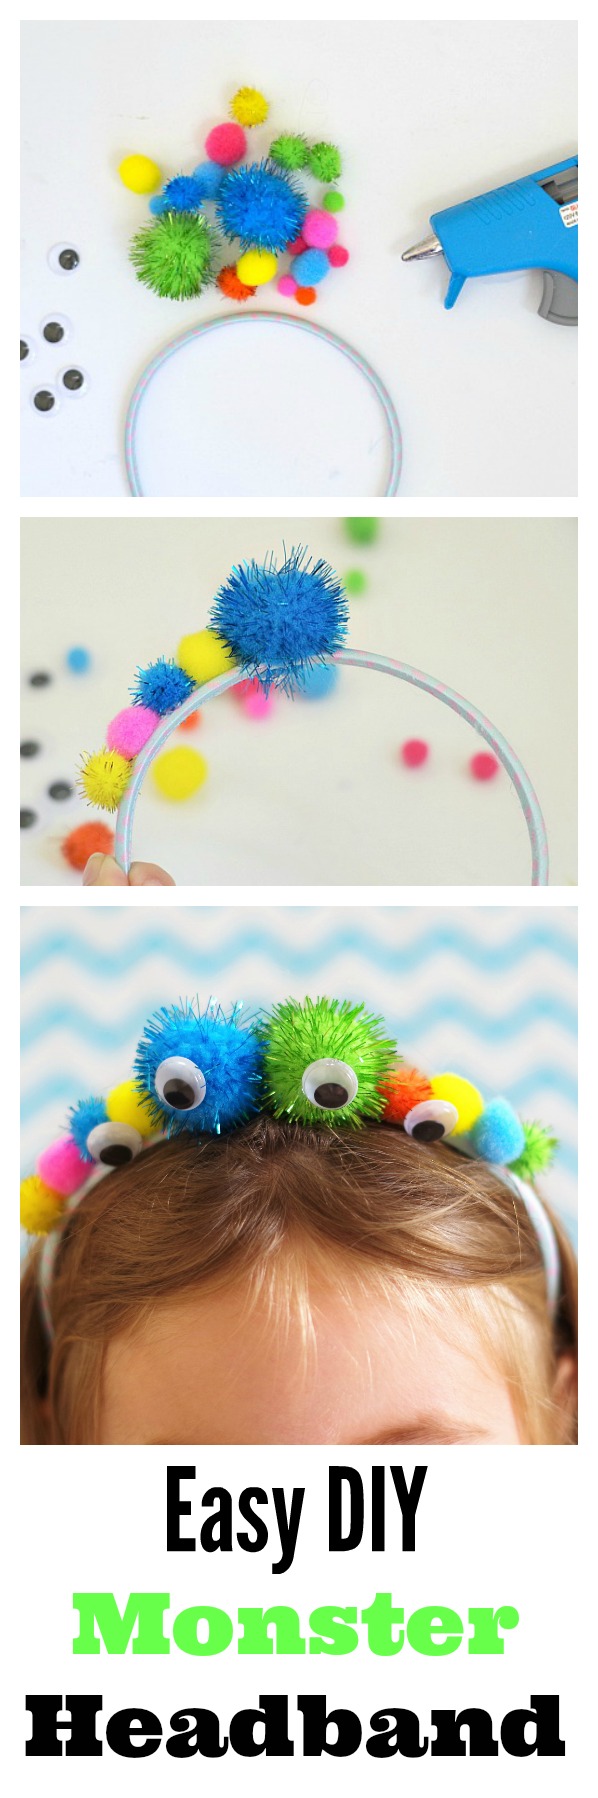 easy-diy-monster-headband-make-this-simple-headband-for-halloween-or-for-fun